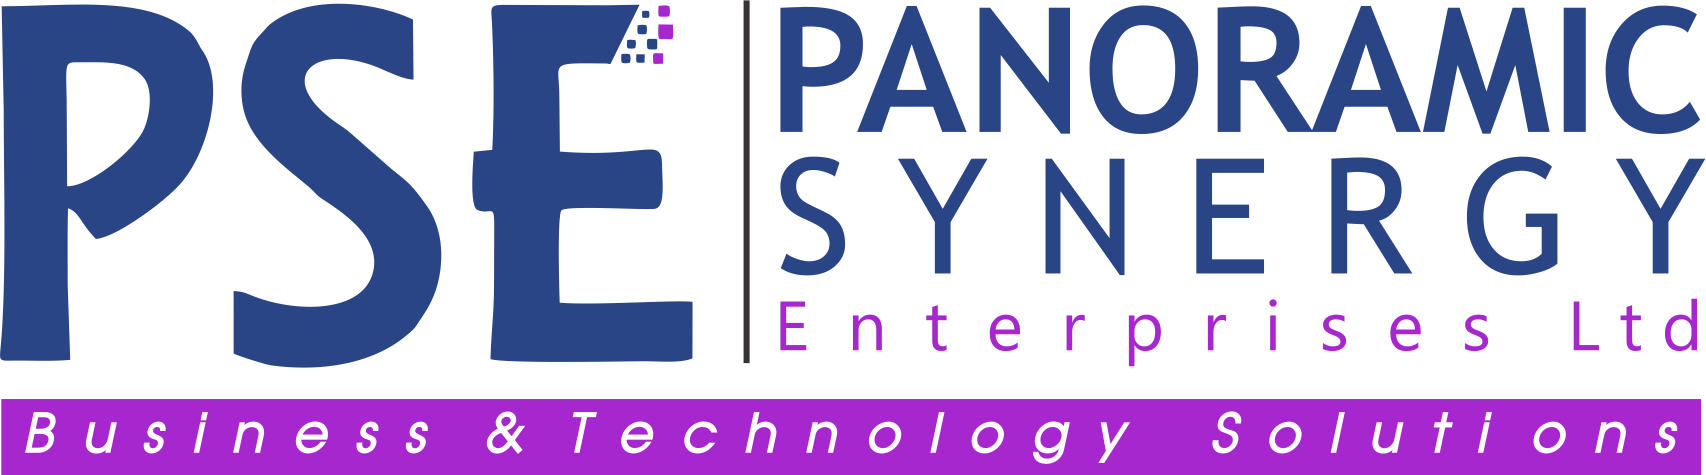 Panoramic Synergy Enterprises